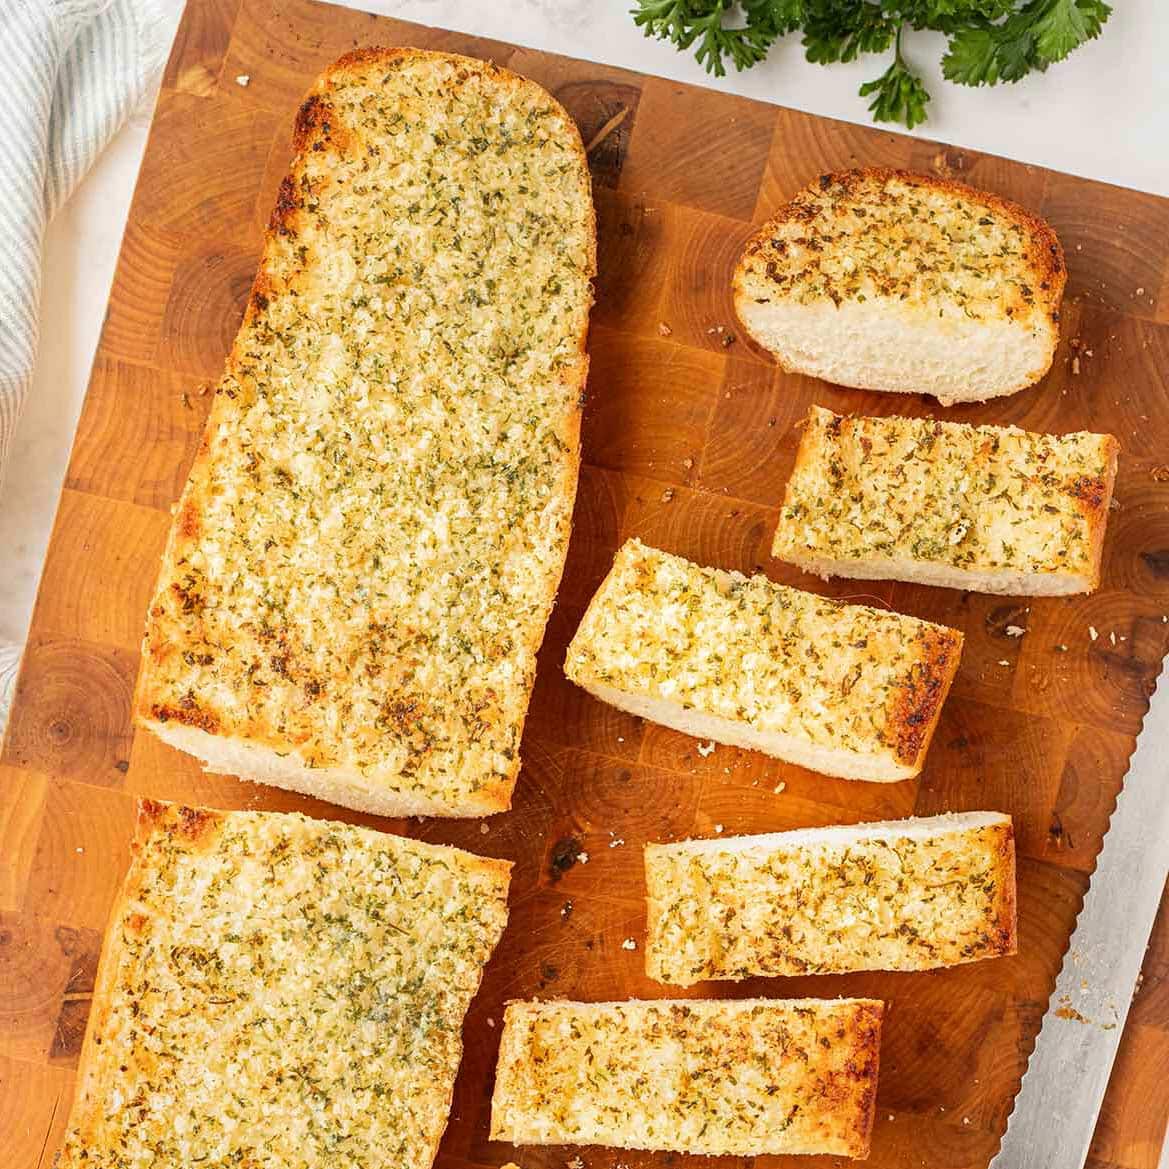 Baked make-ahead freezer garlic bread on a wooden cutting board.